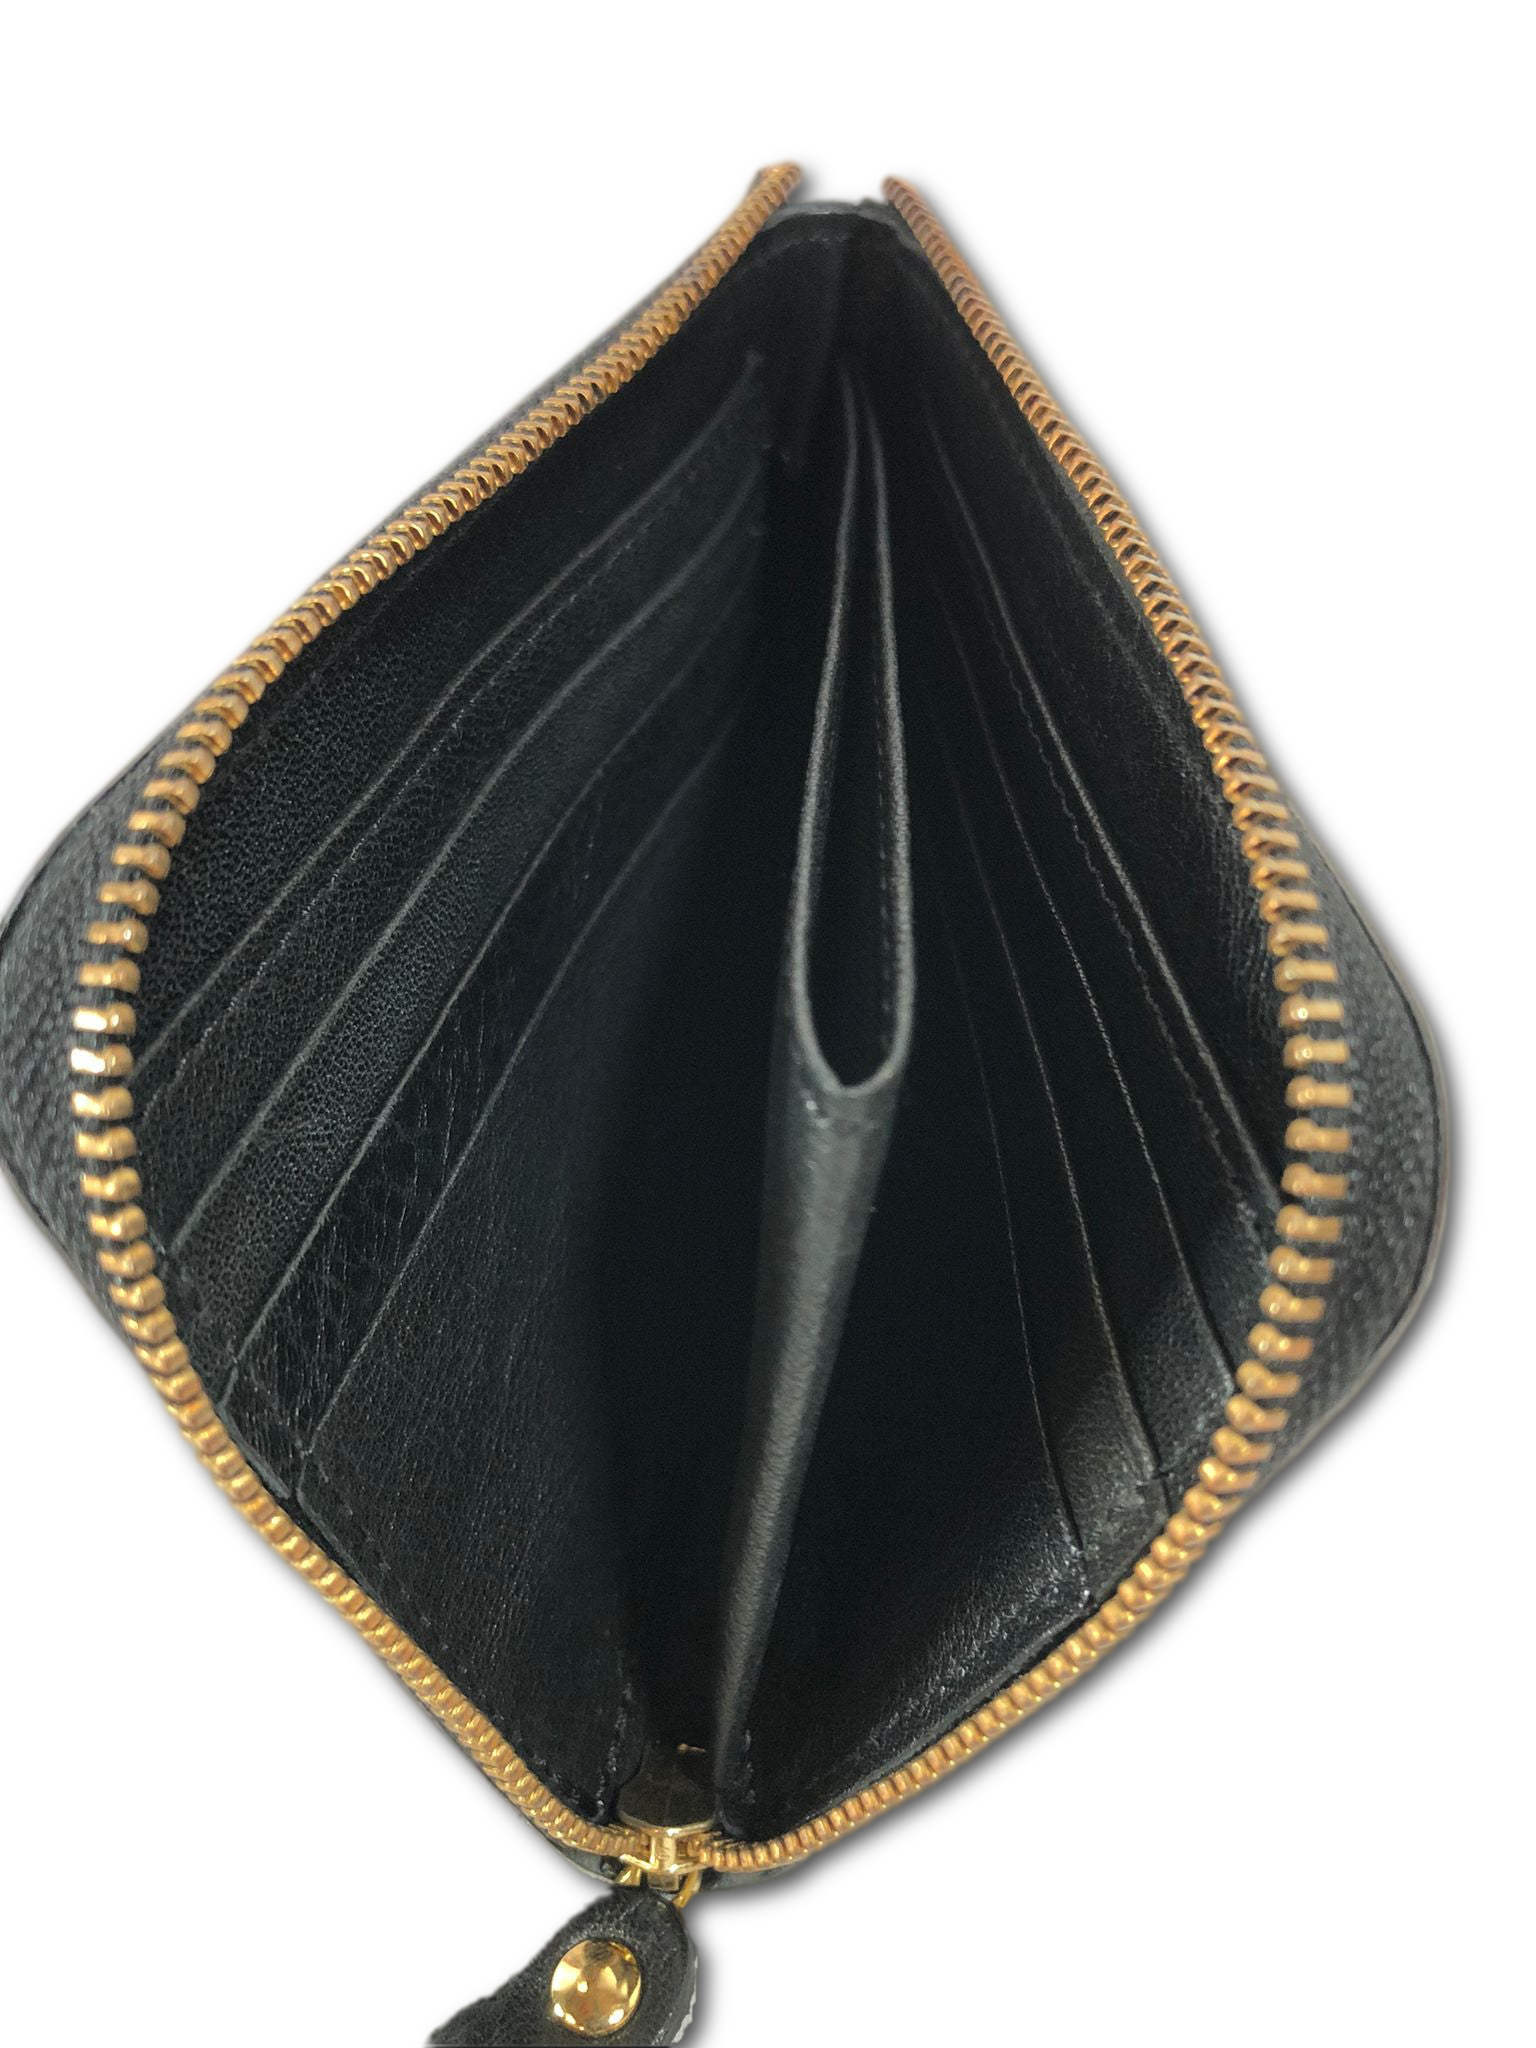 Handmade Japanese Naniwa Tochigi Leather Zipper Wallet - Black